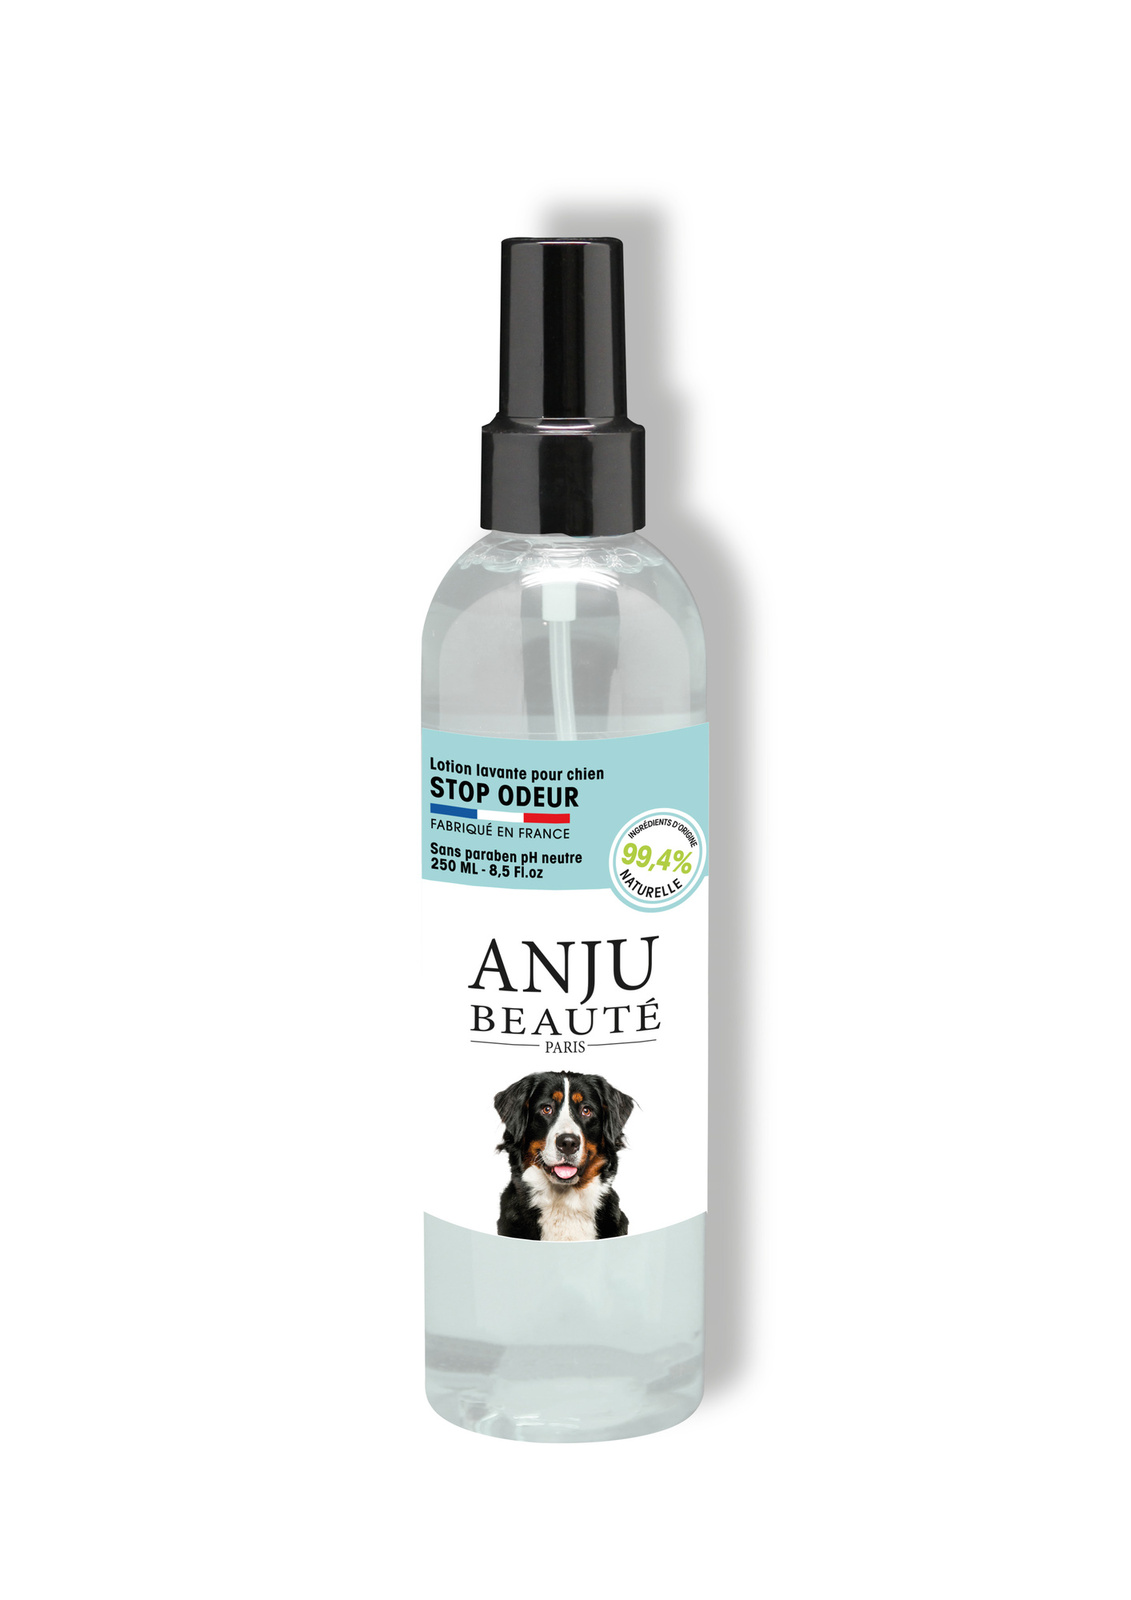 Anju Beaute Anju Beaute лосьон для собак от запахов, 250 мл (250 г) anju beaute anju beaute спрей для собак для облегчения расчесывания 250 мл 250 г